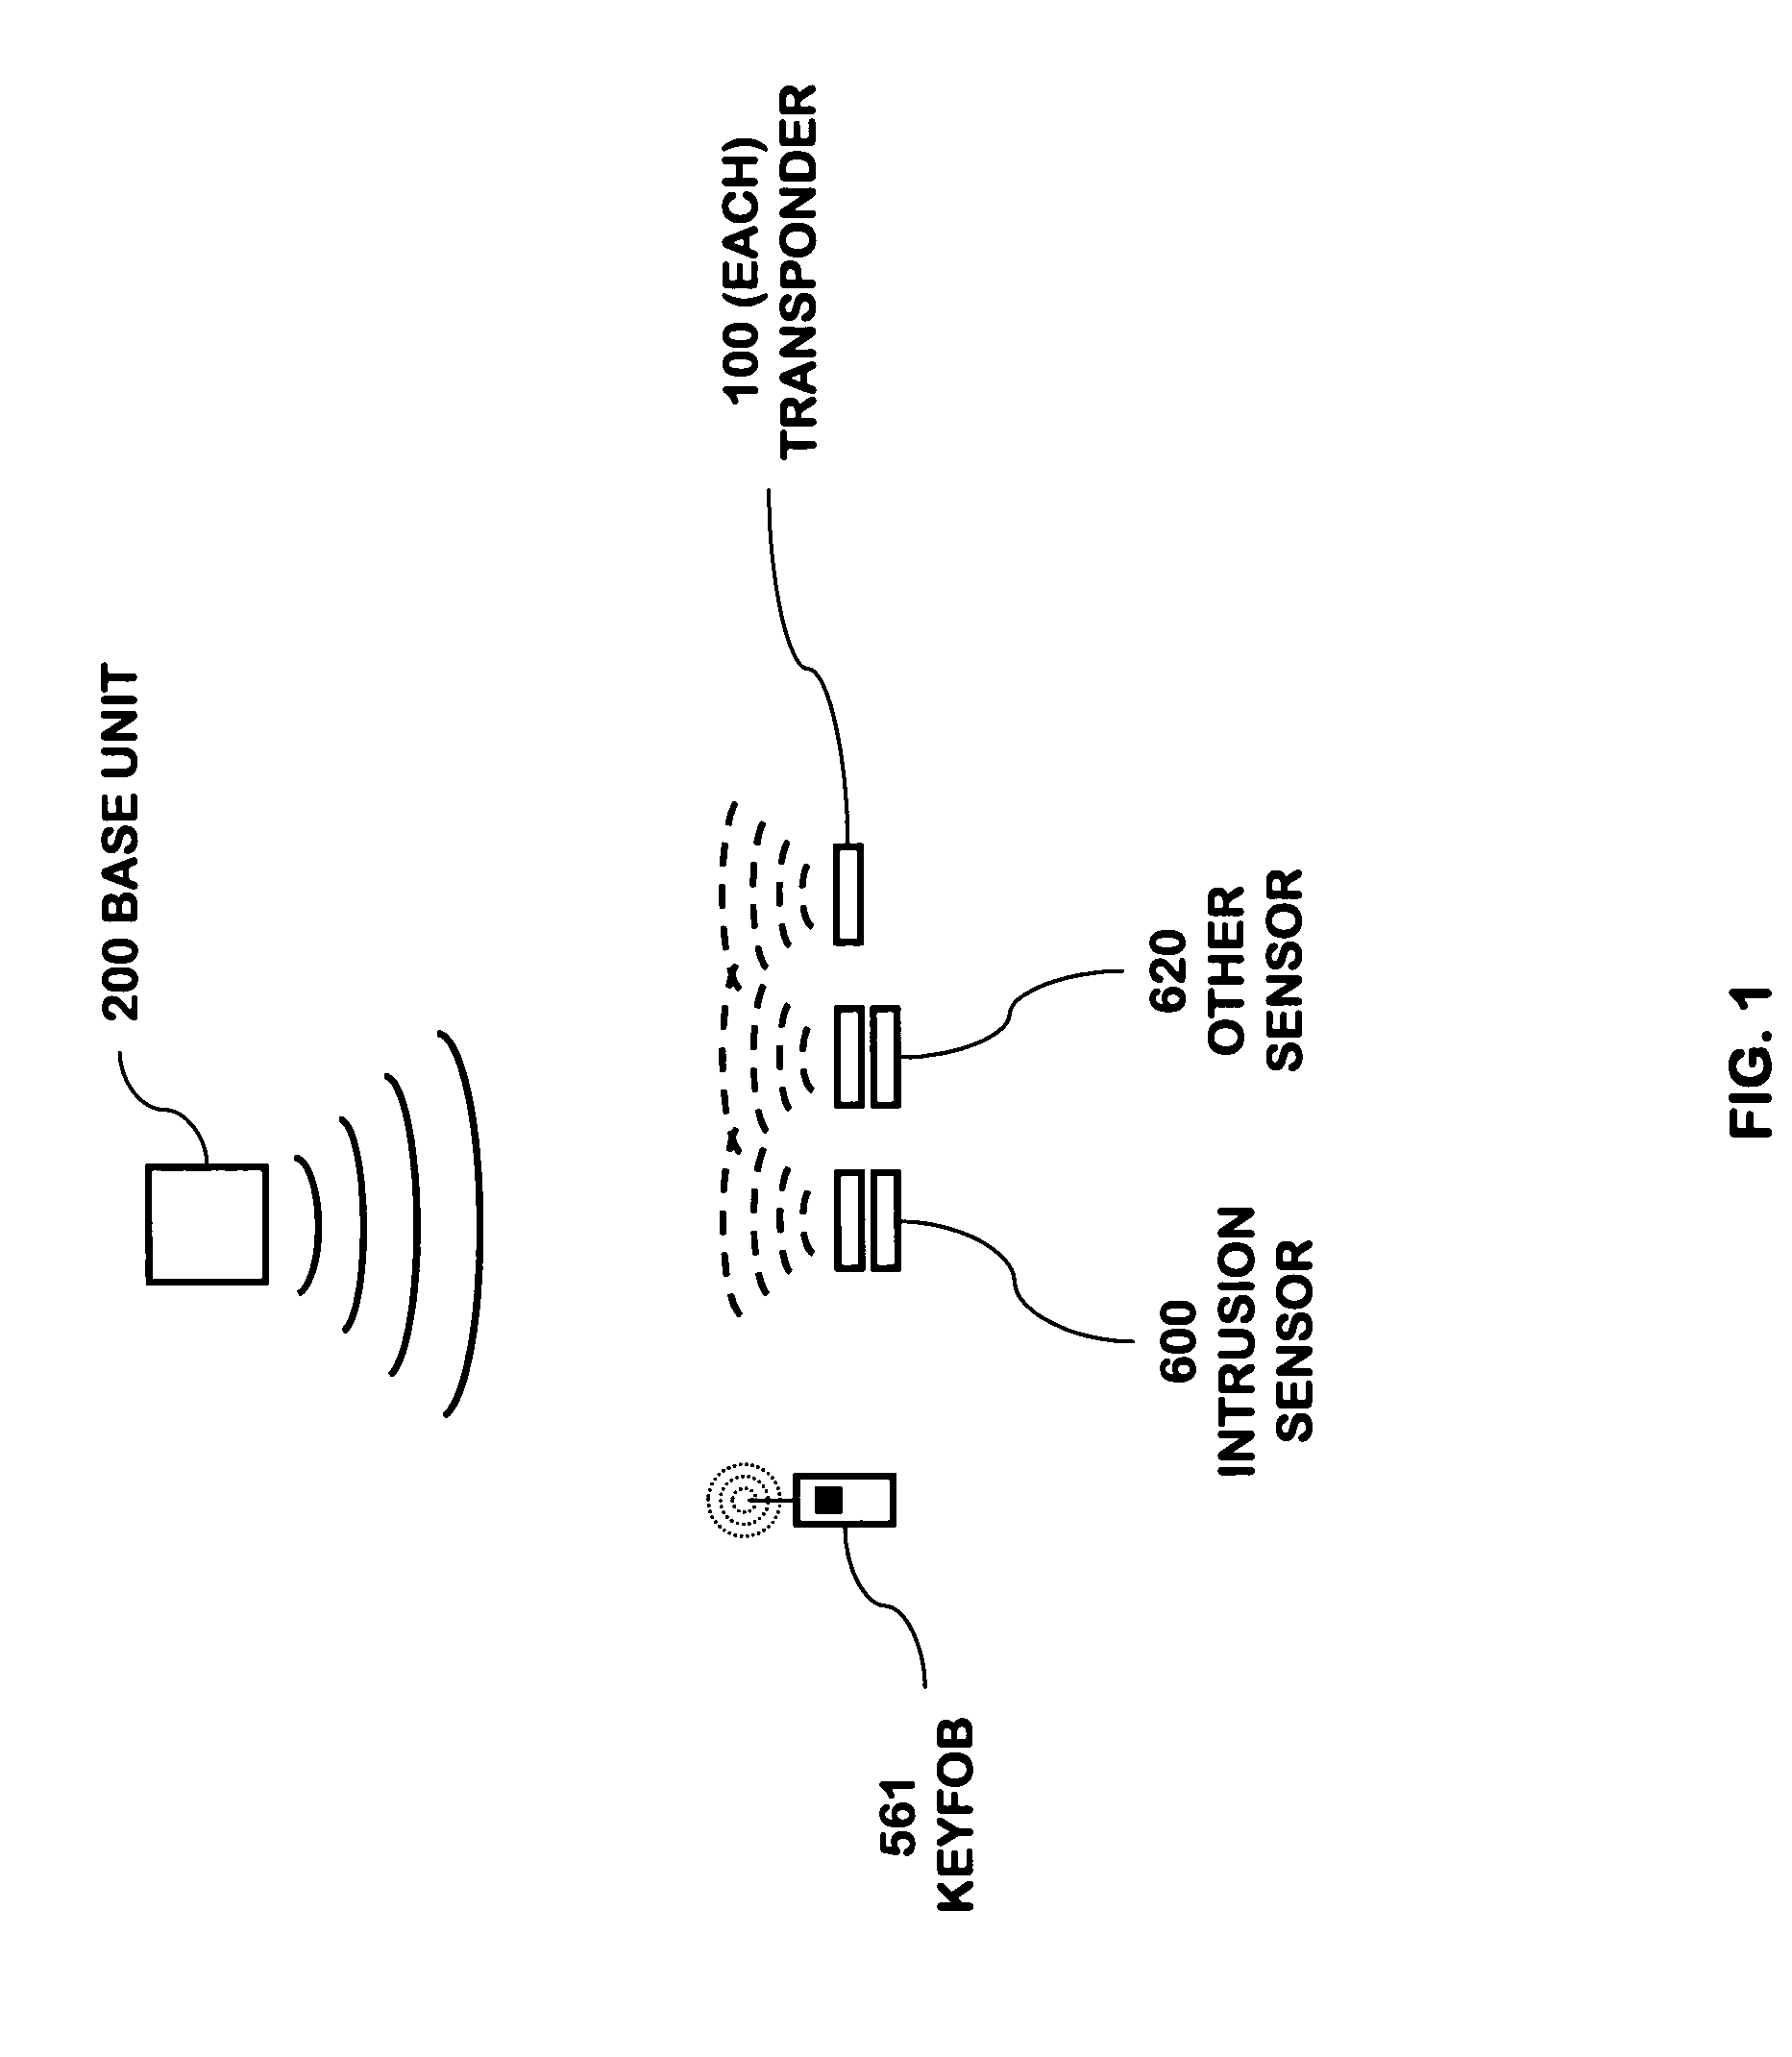 Multi-controller security network